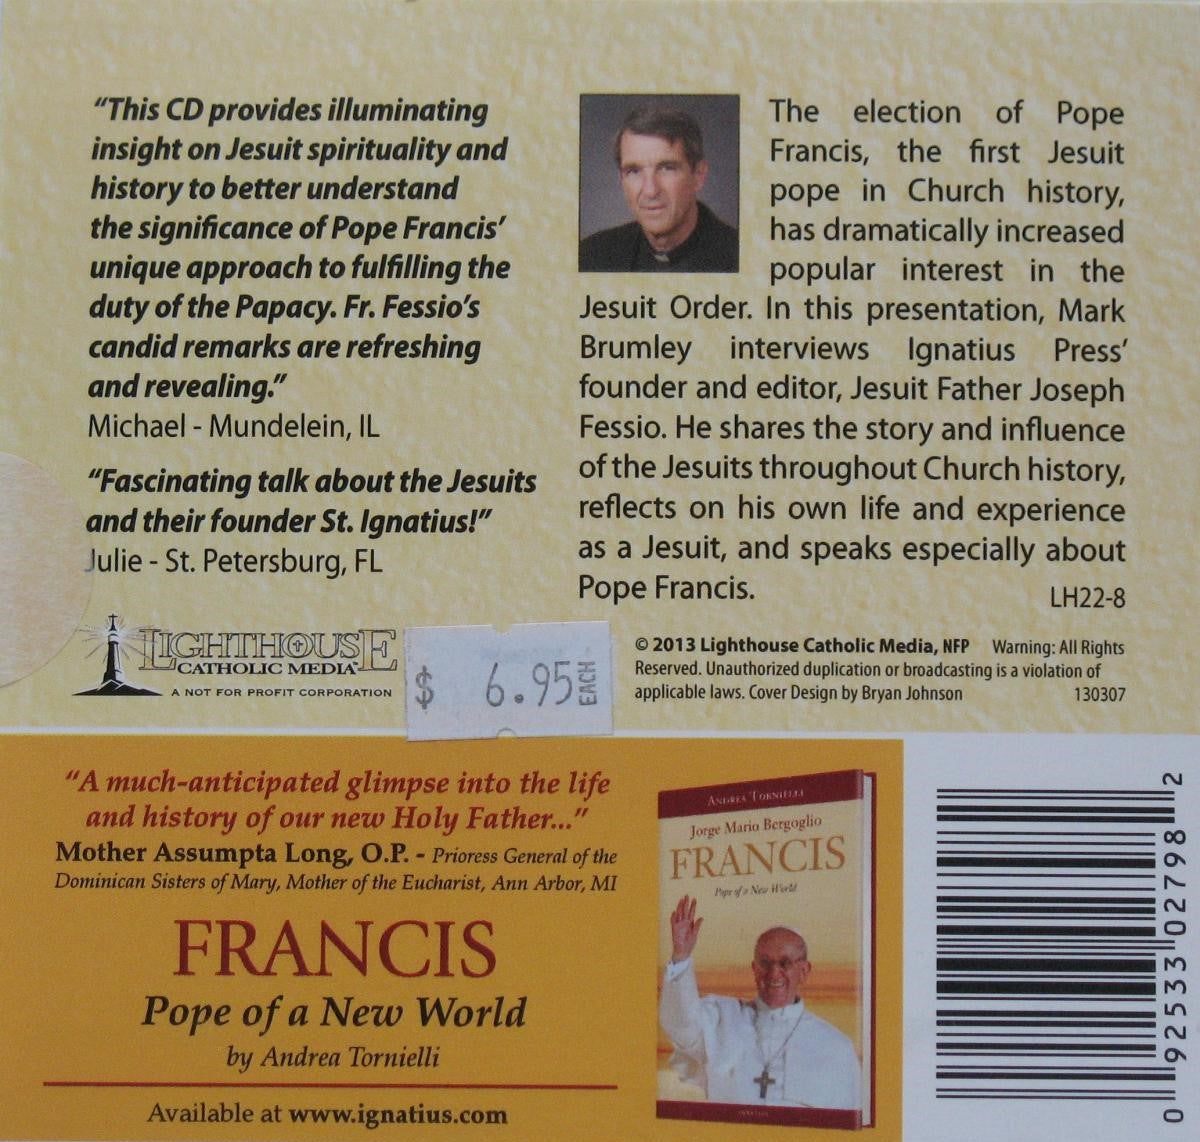 Fessio, Fr. Joseph - The Jesuits, The Church, & The Papacy - CD Talk